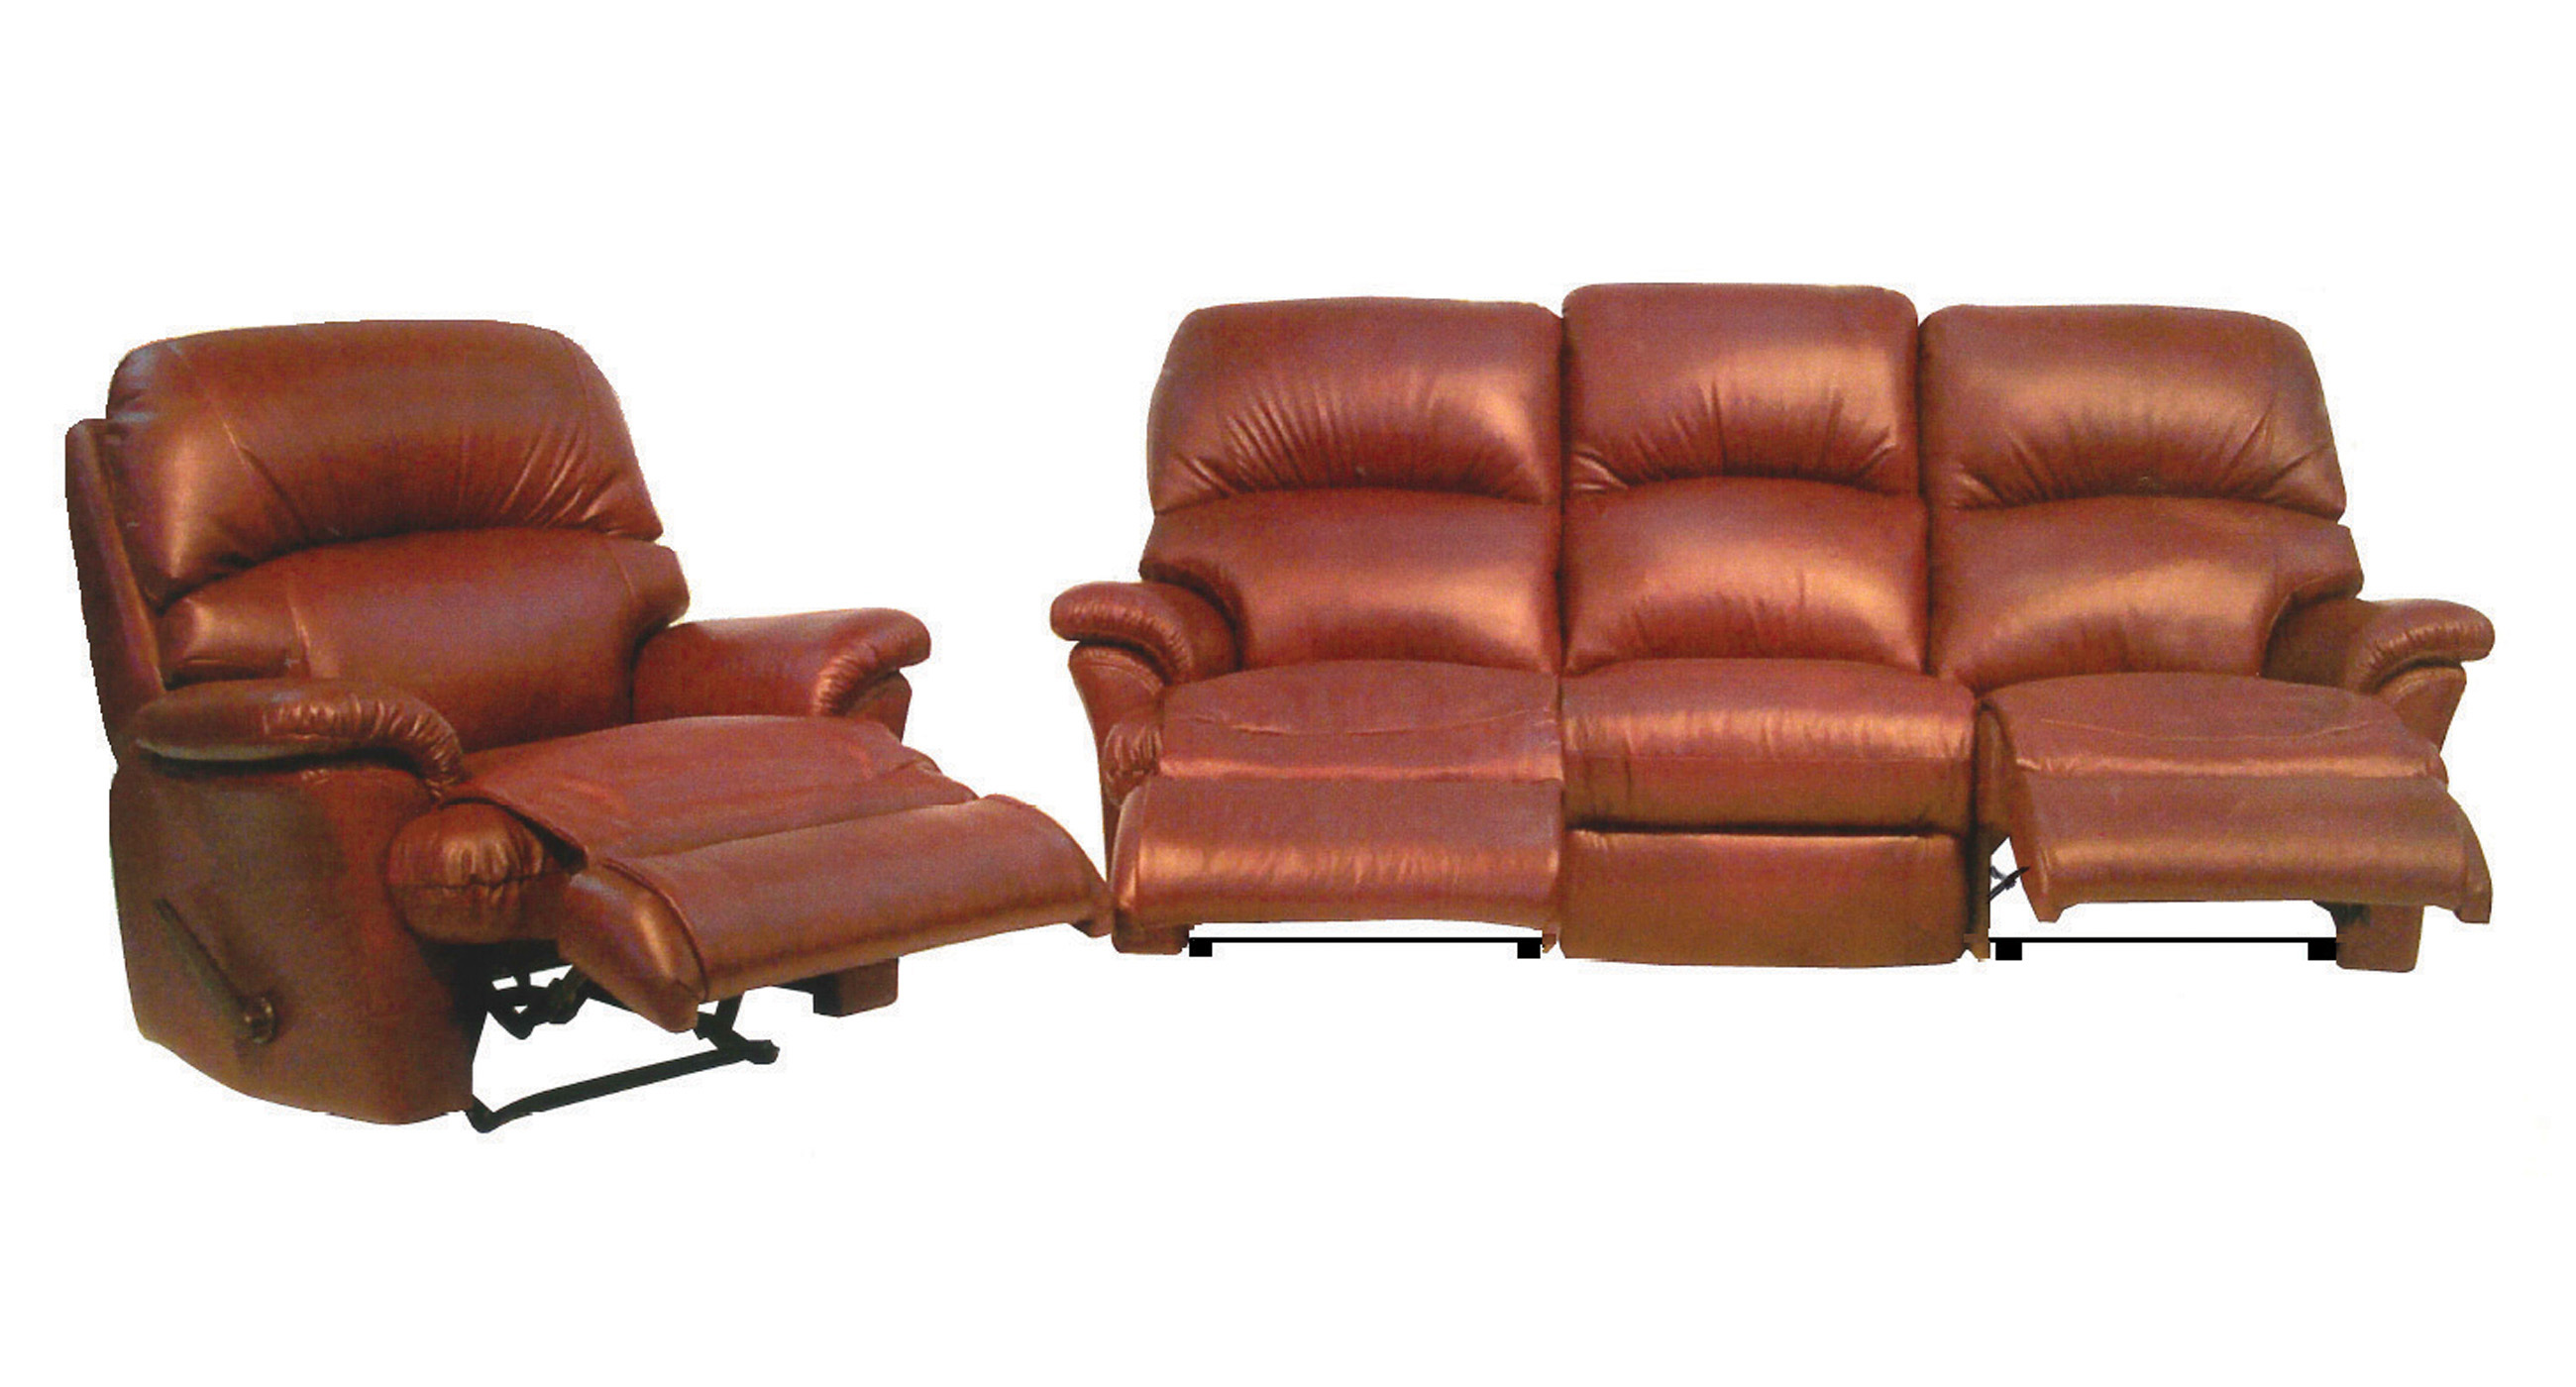 Latrobe Reclining Sofa and Chairs